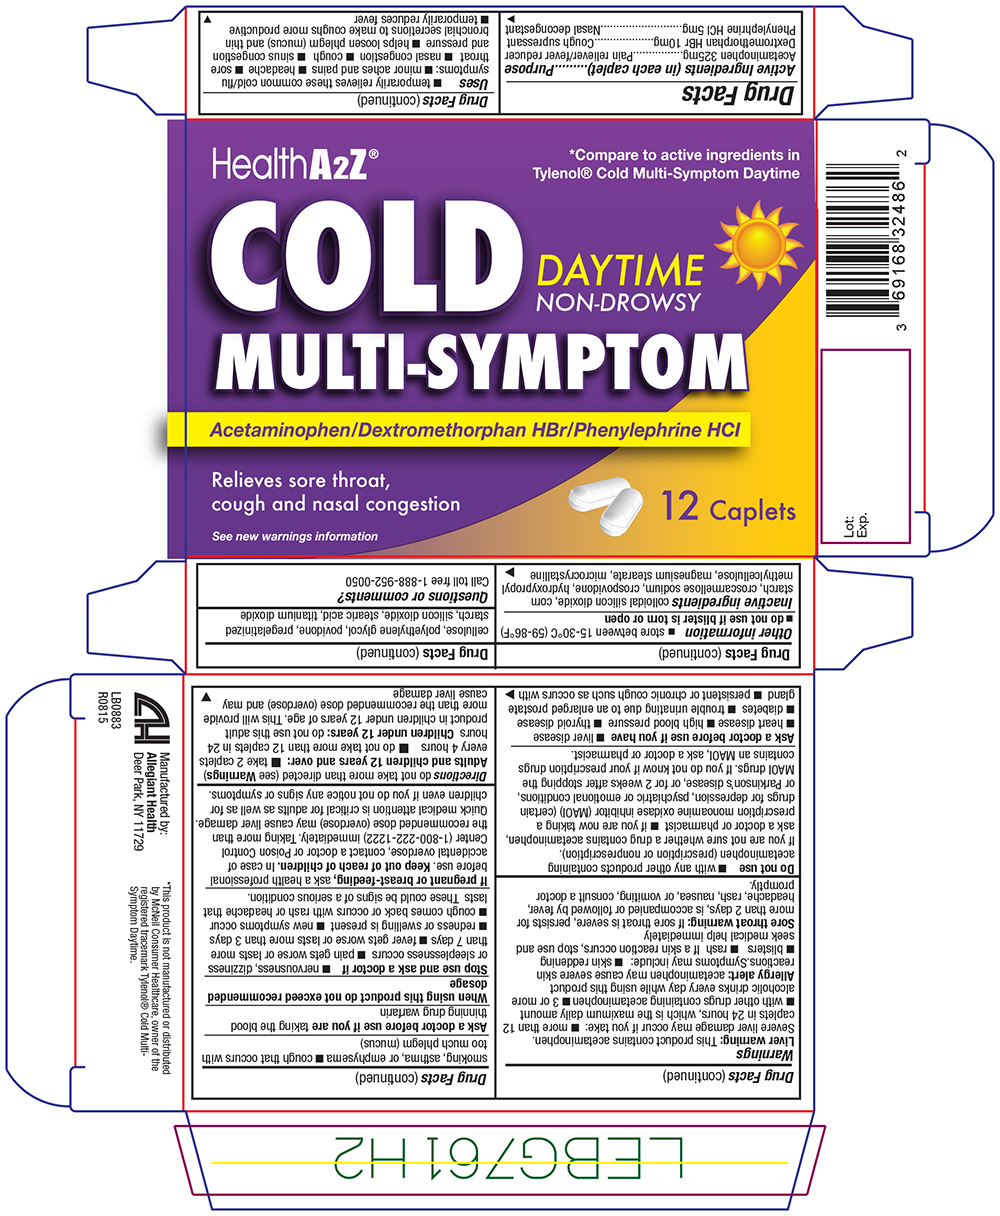 Cold Multi-Symptom